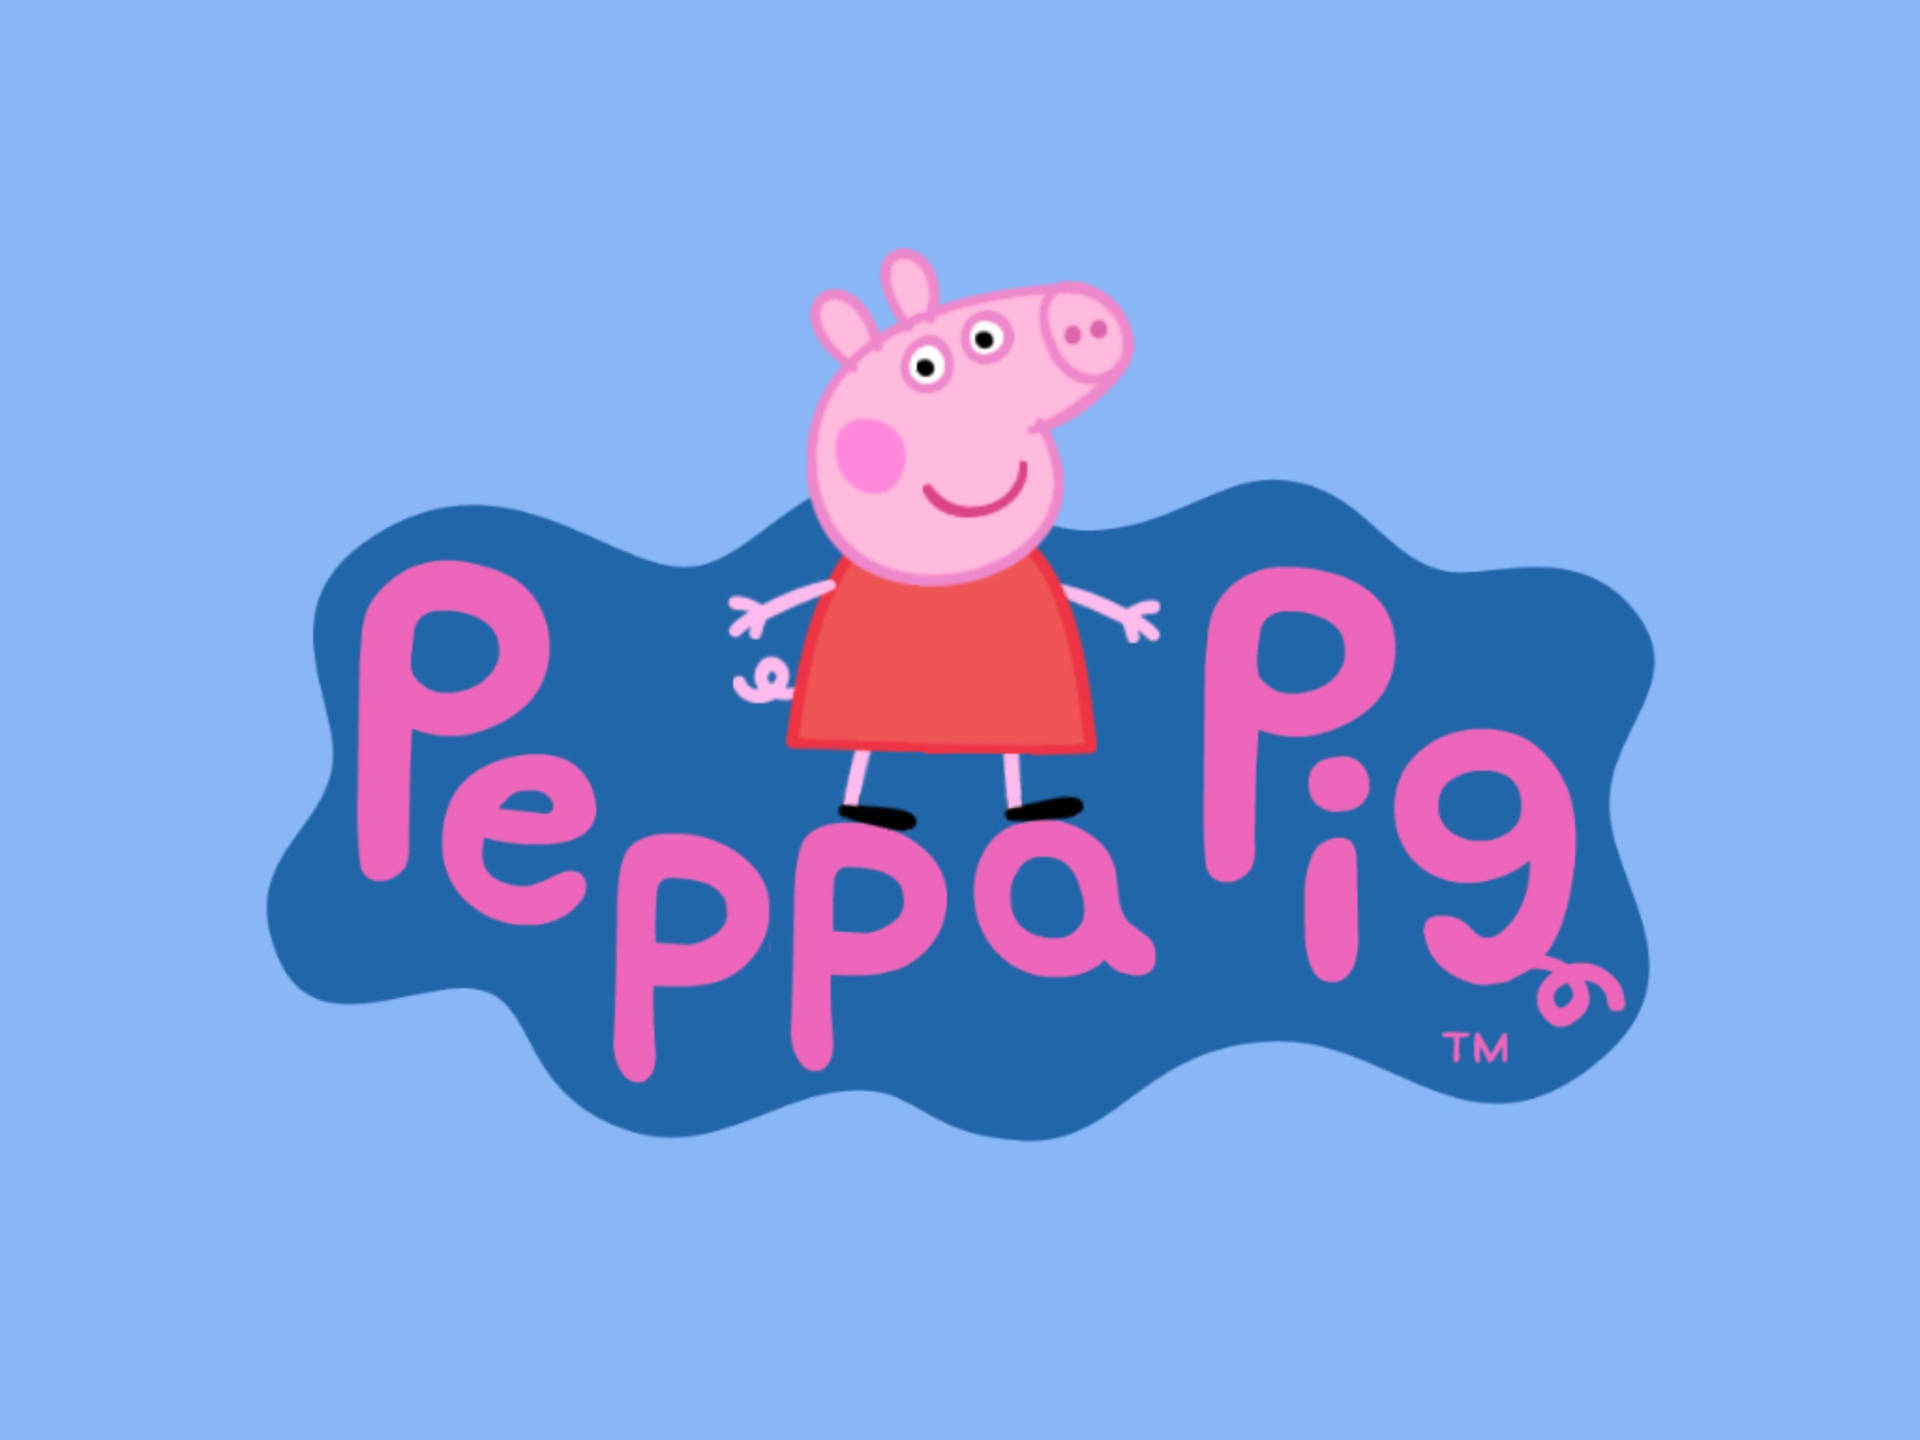 Peppa Pig iPad Titel skaber en sjov, interaktiv oplevelse. Wallpaper